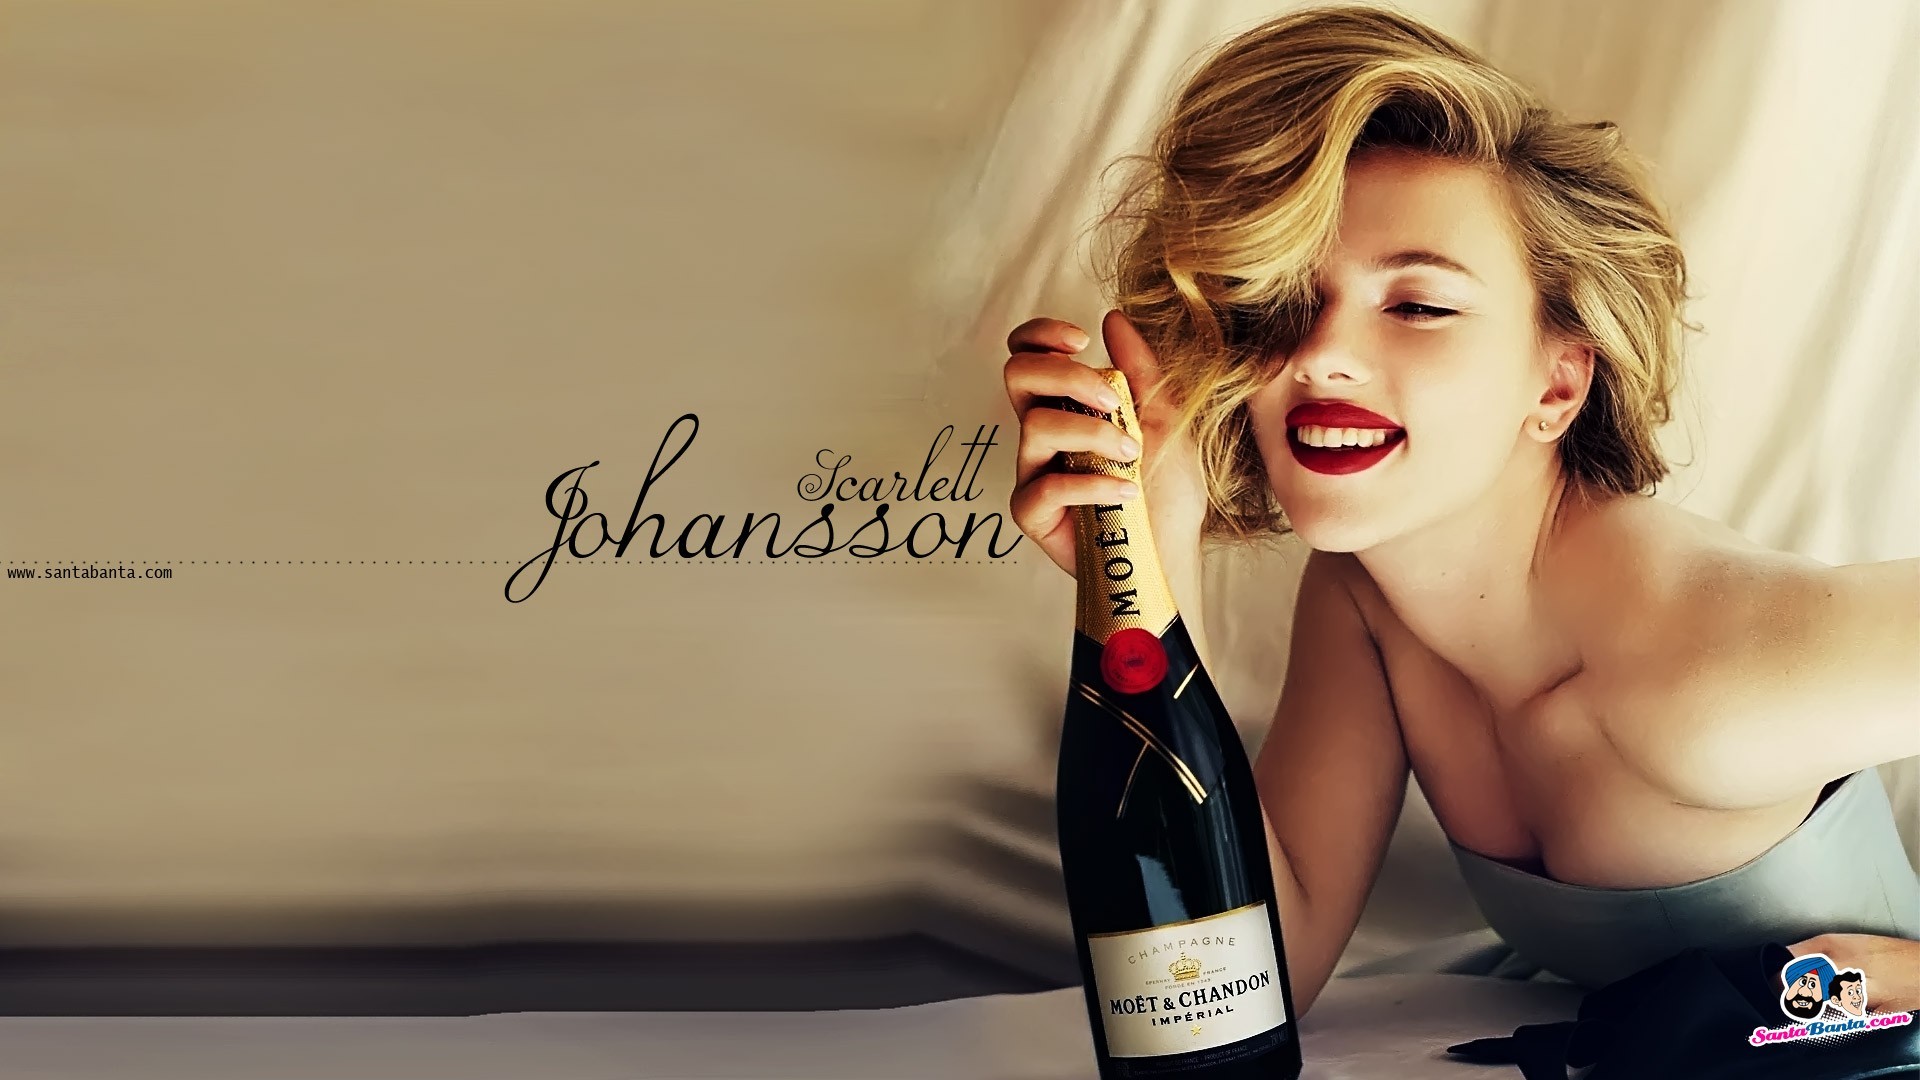 1920x1080 Celebrity - Scarlett Johansson Wallpaper